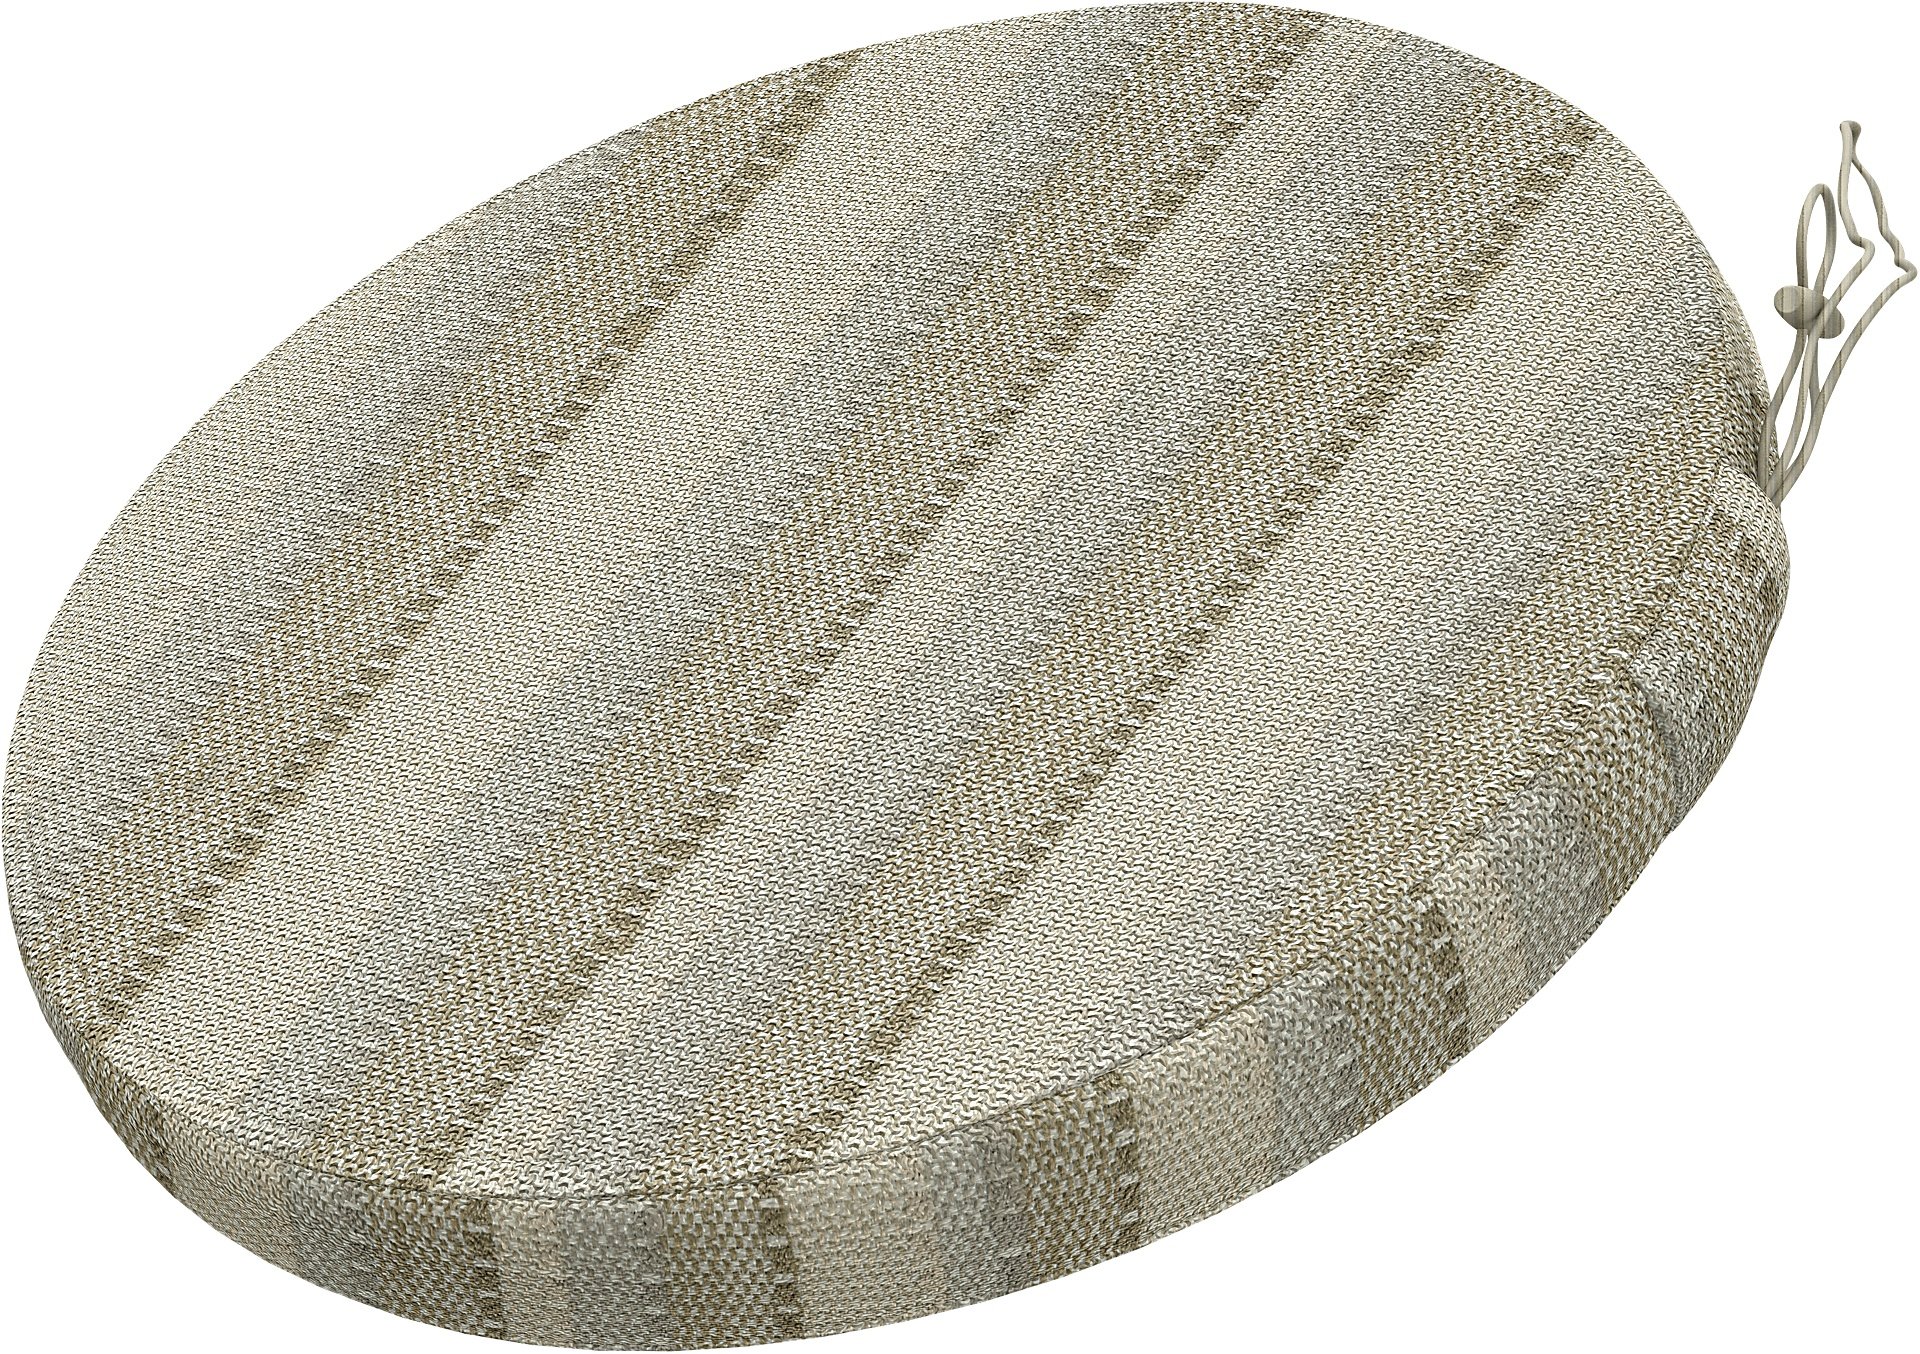 IKEA - Froson/Duvholmen Chair Seat Cushion Round Cover , Beach Beige, Outdoor - Bemz